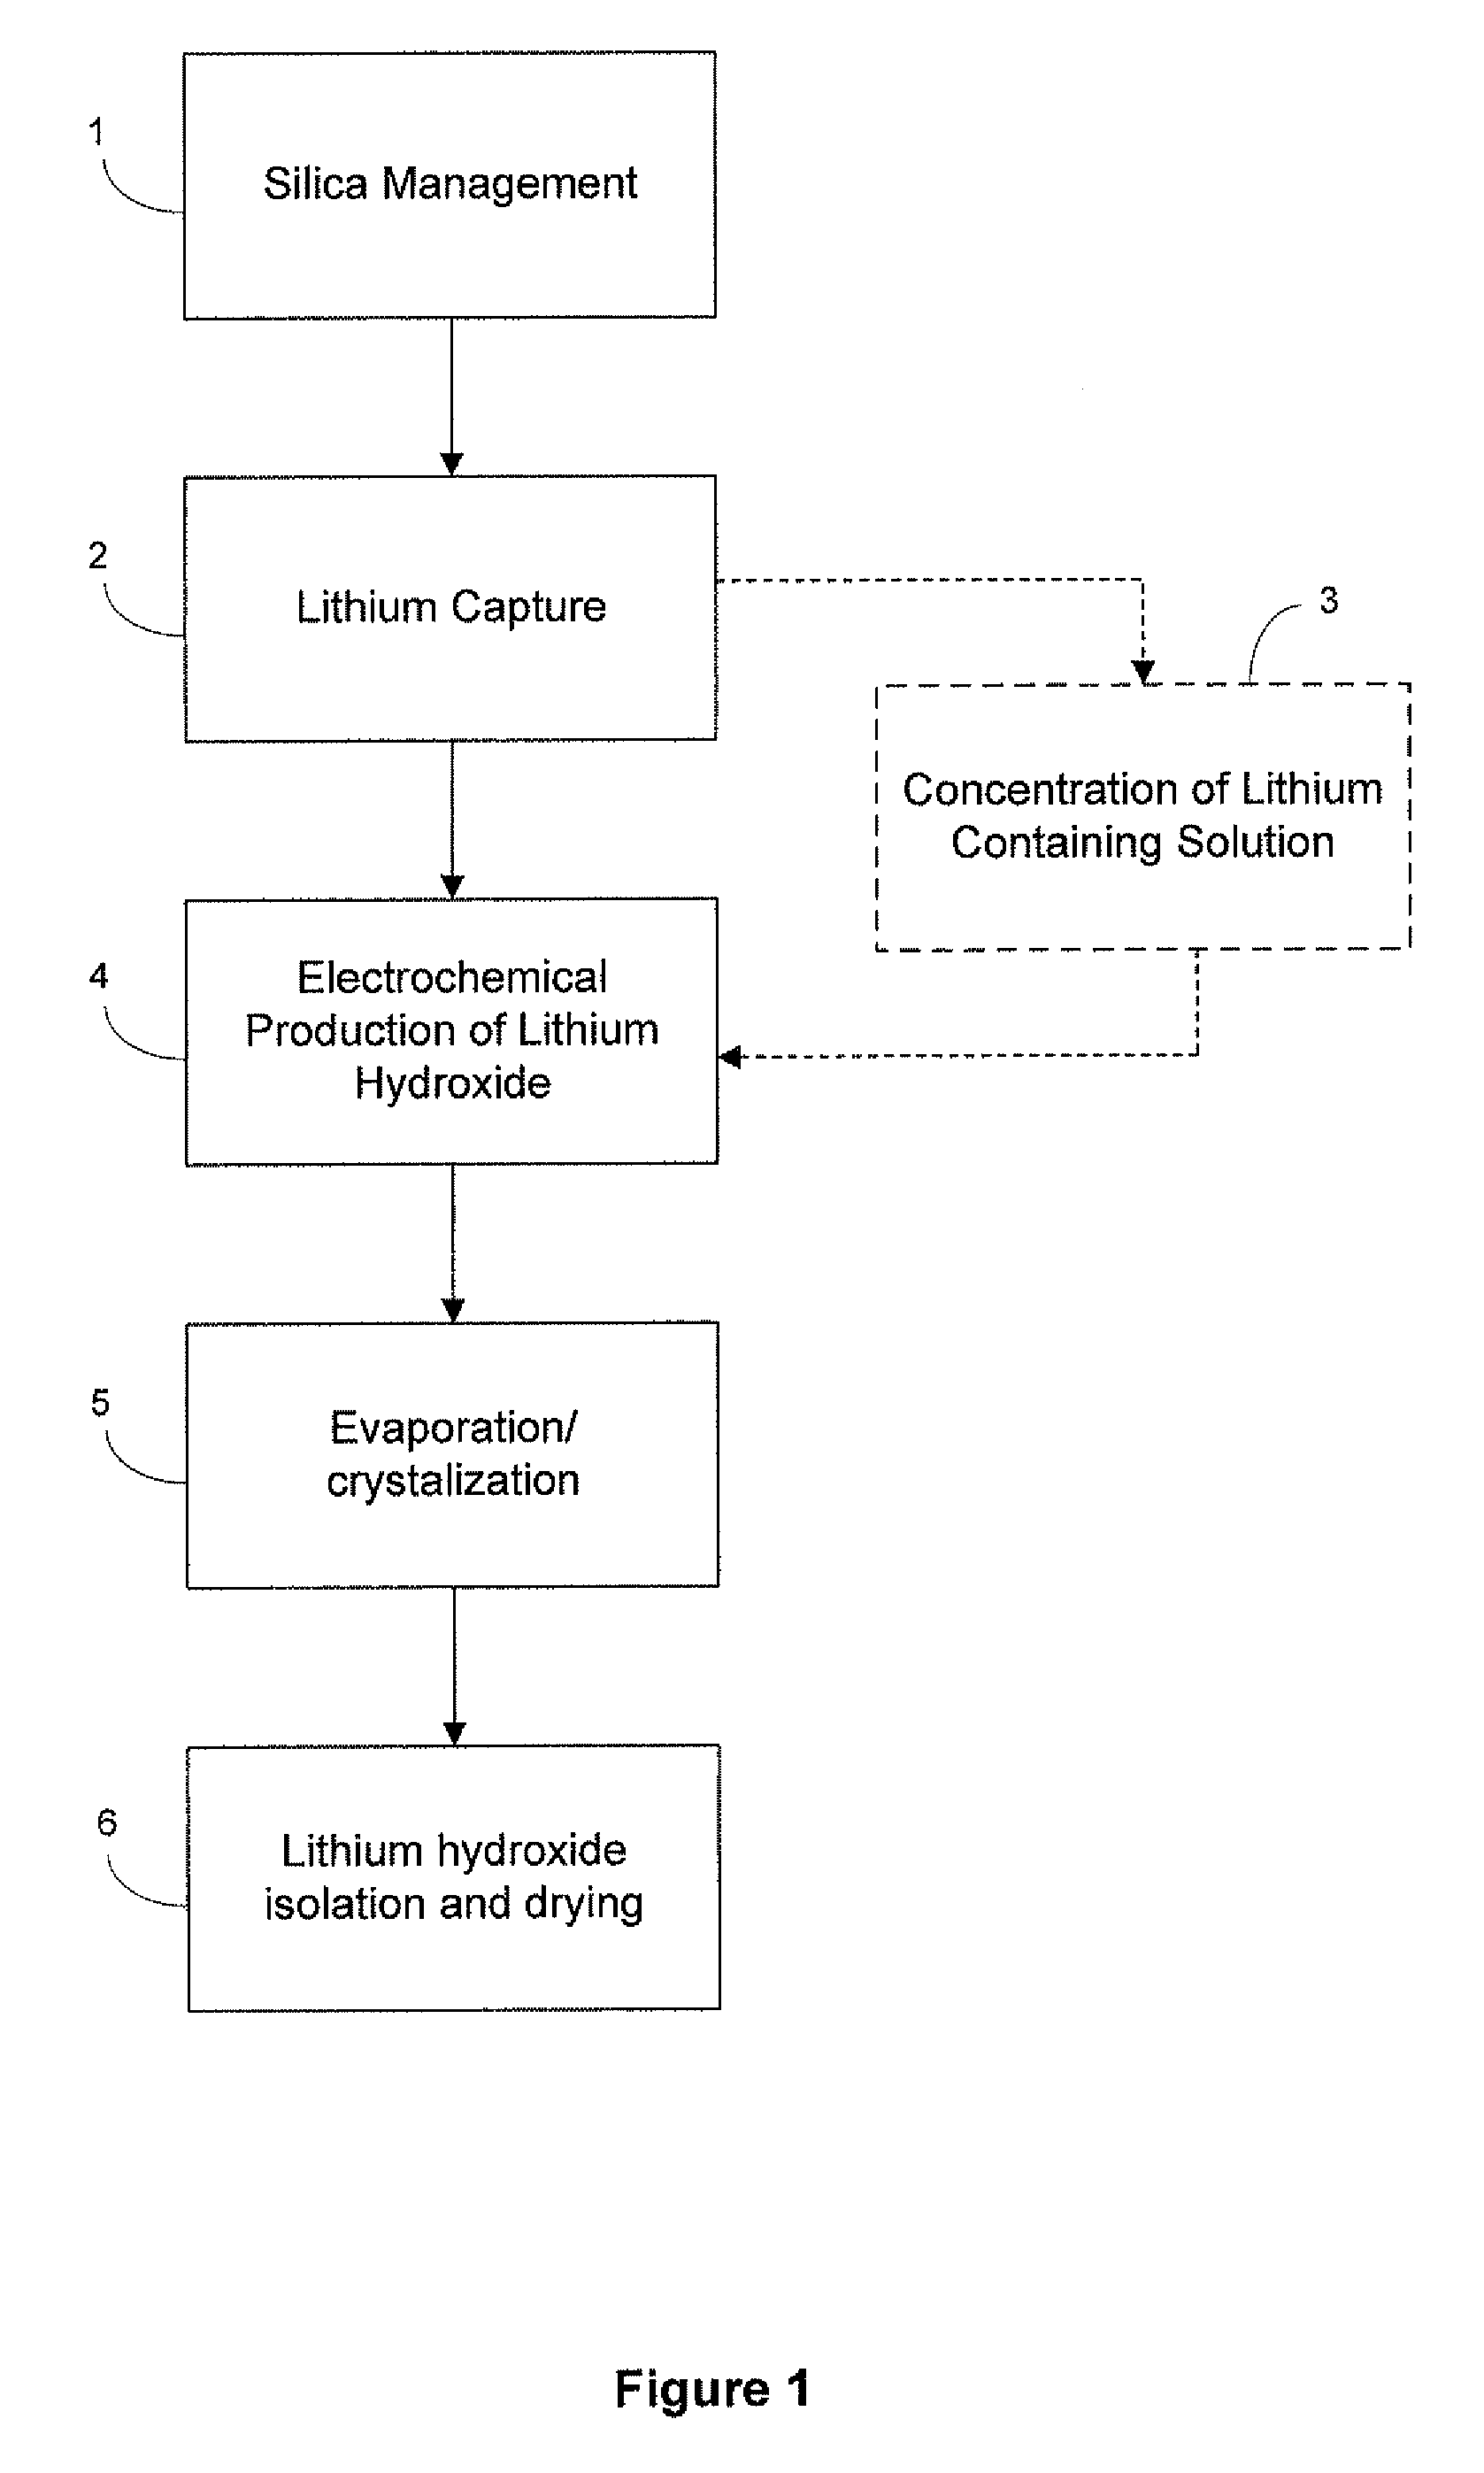 Preparation of lithium carbonate from lithium chloride containing brines